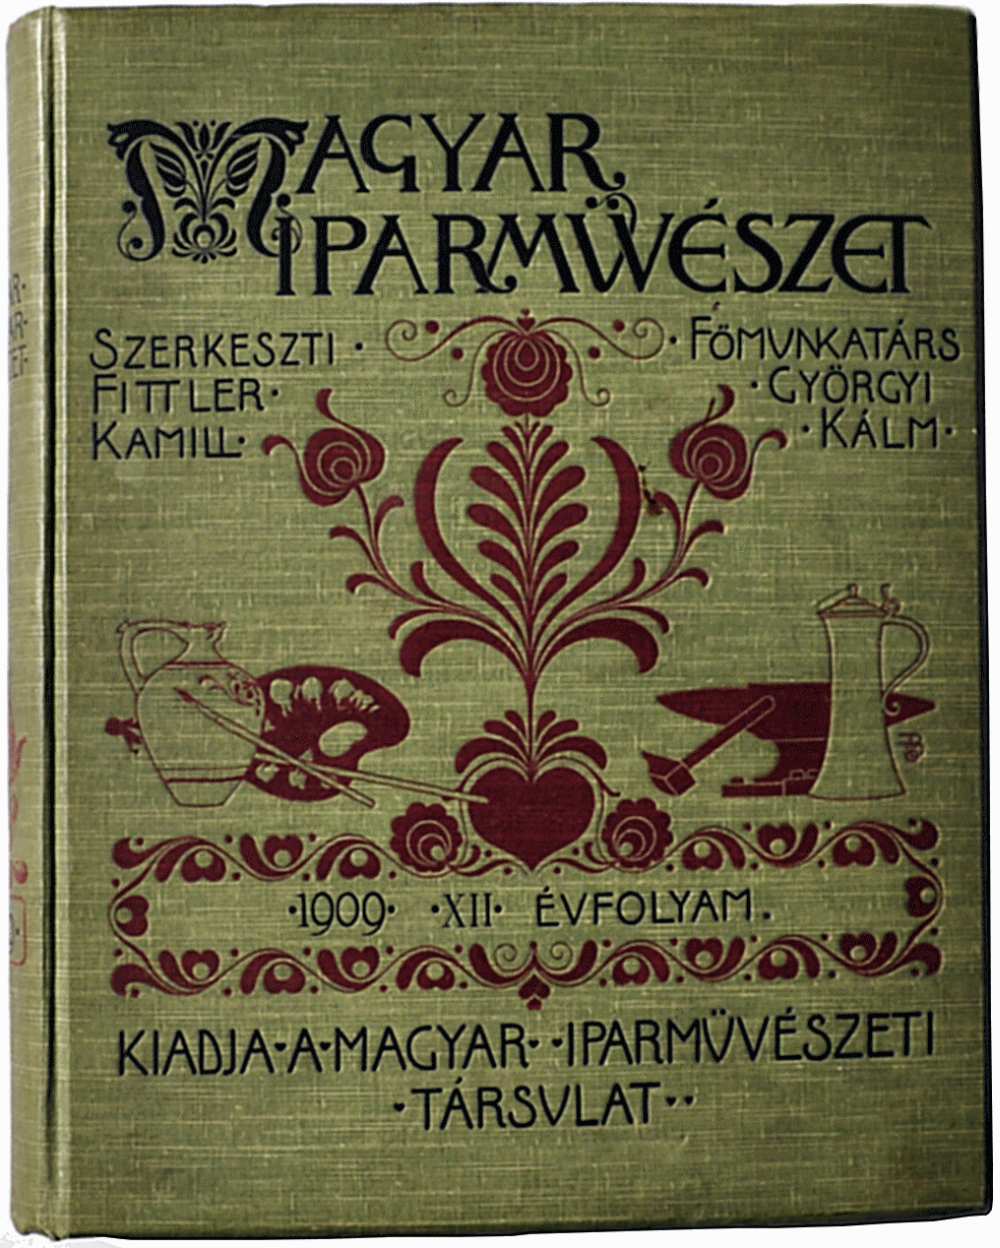 4_kep_-magyar_iparmuveszet_1909_j2_opti.jpg